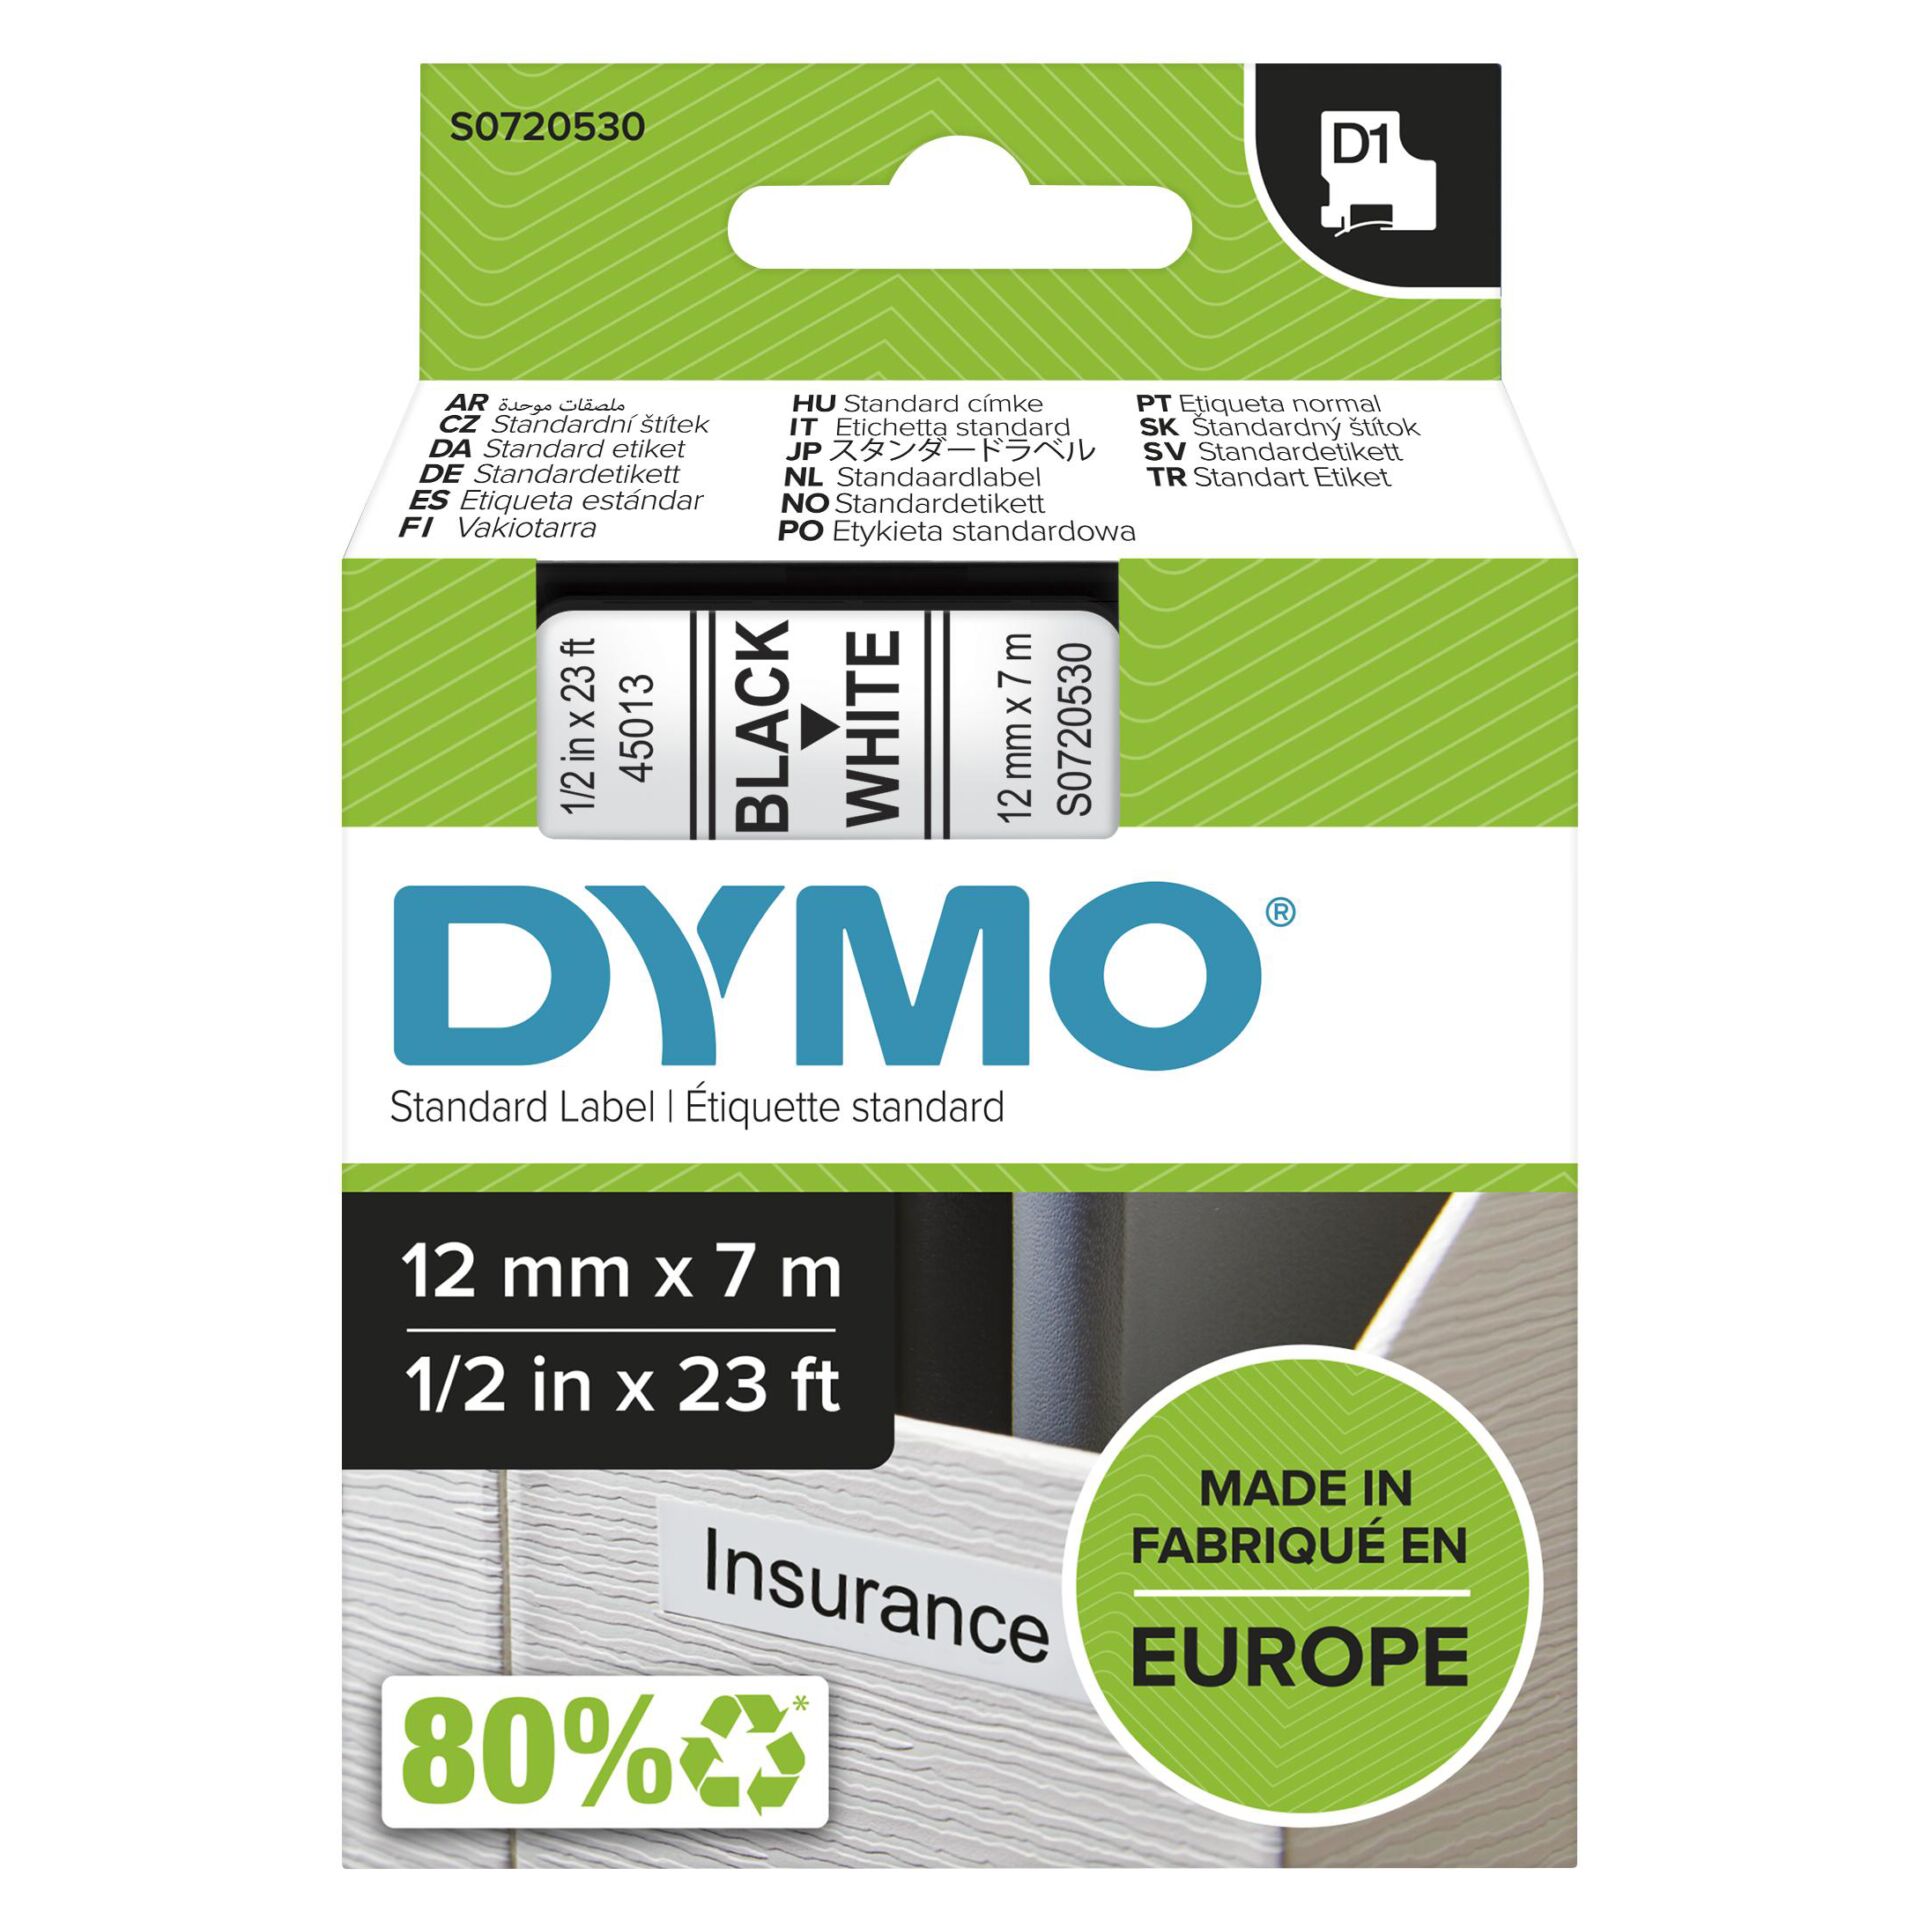 Dymo D1 12mm schwarz/weiß 